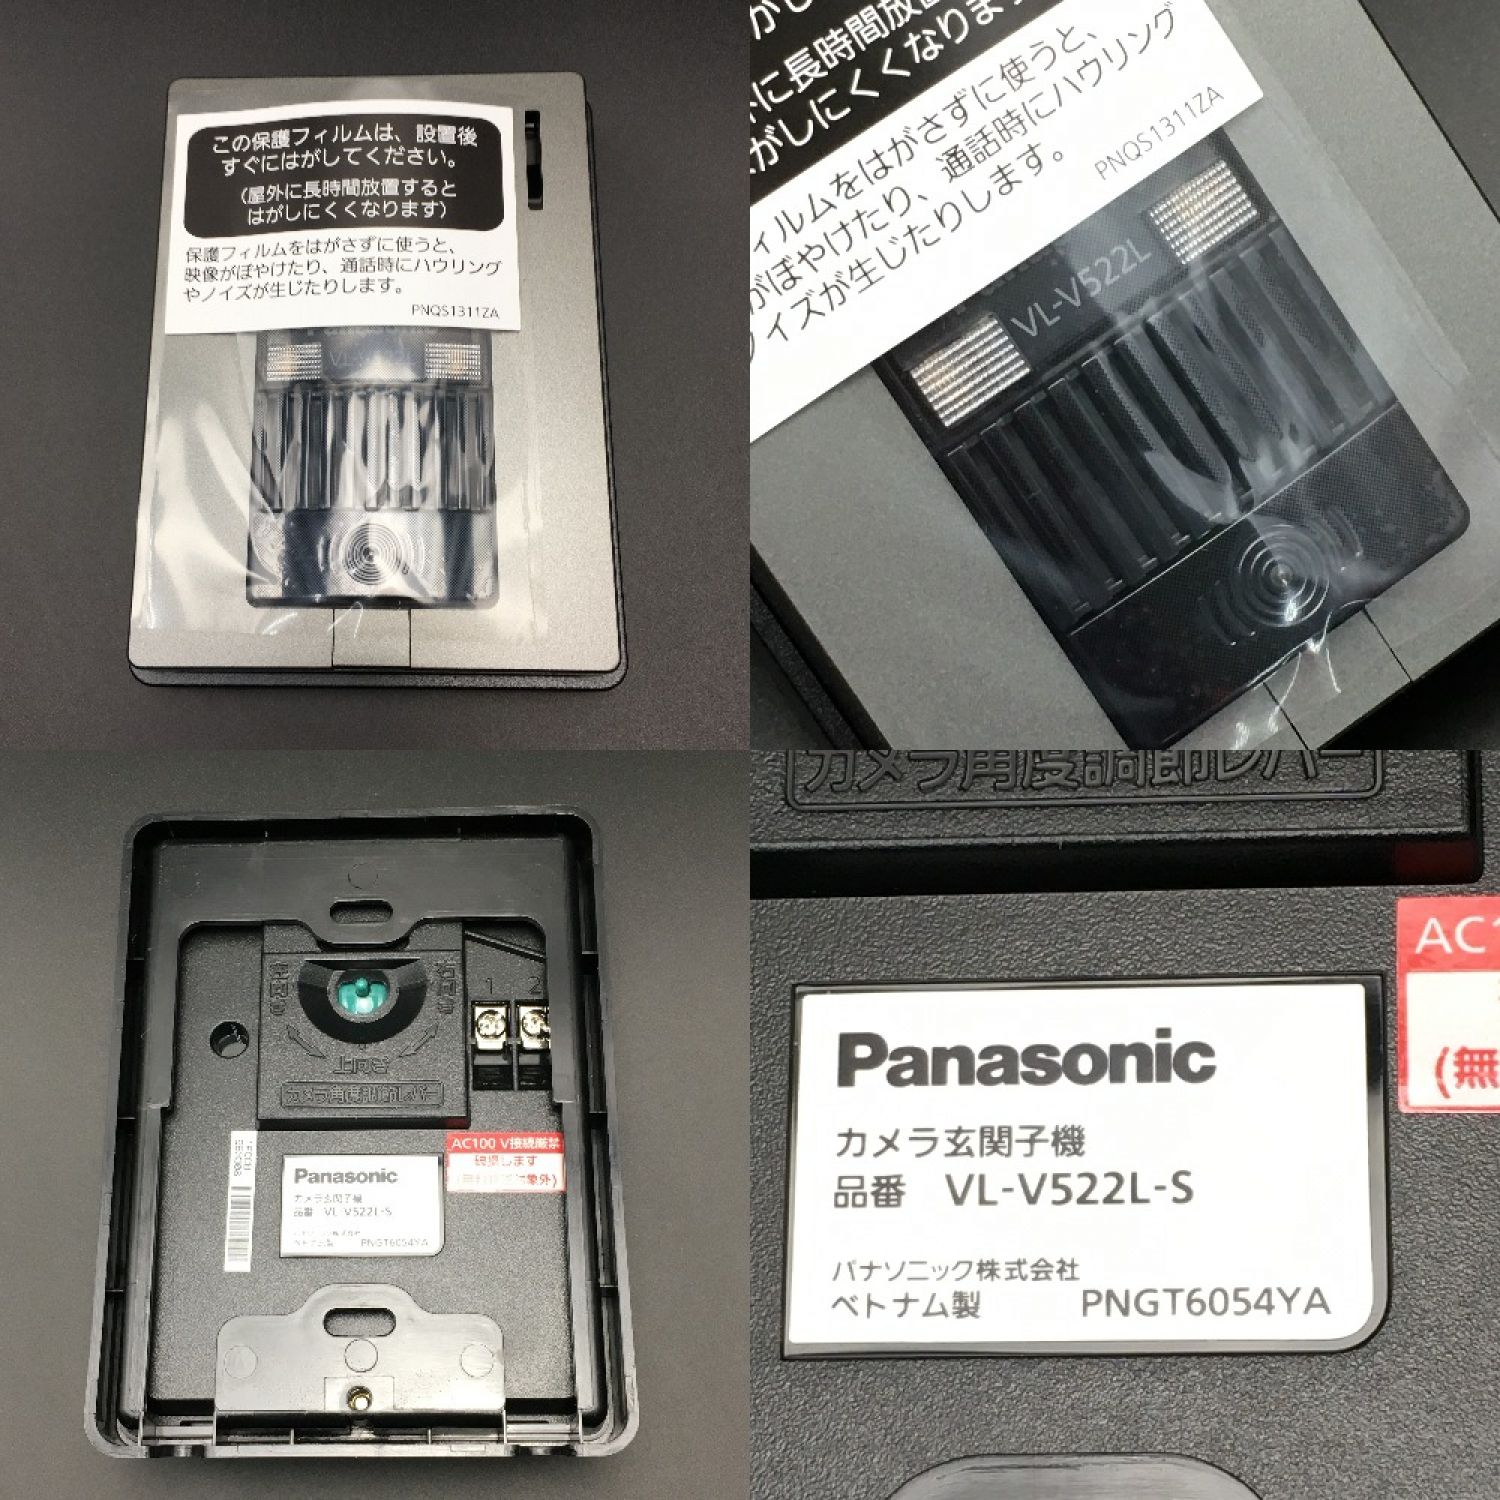 Panasonic テレビドアホン VL-SE30XL